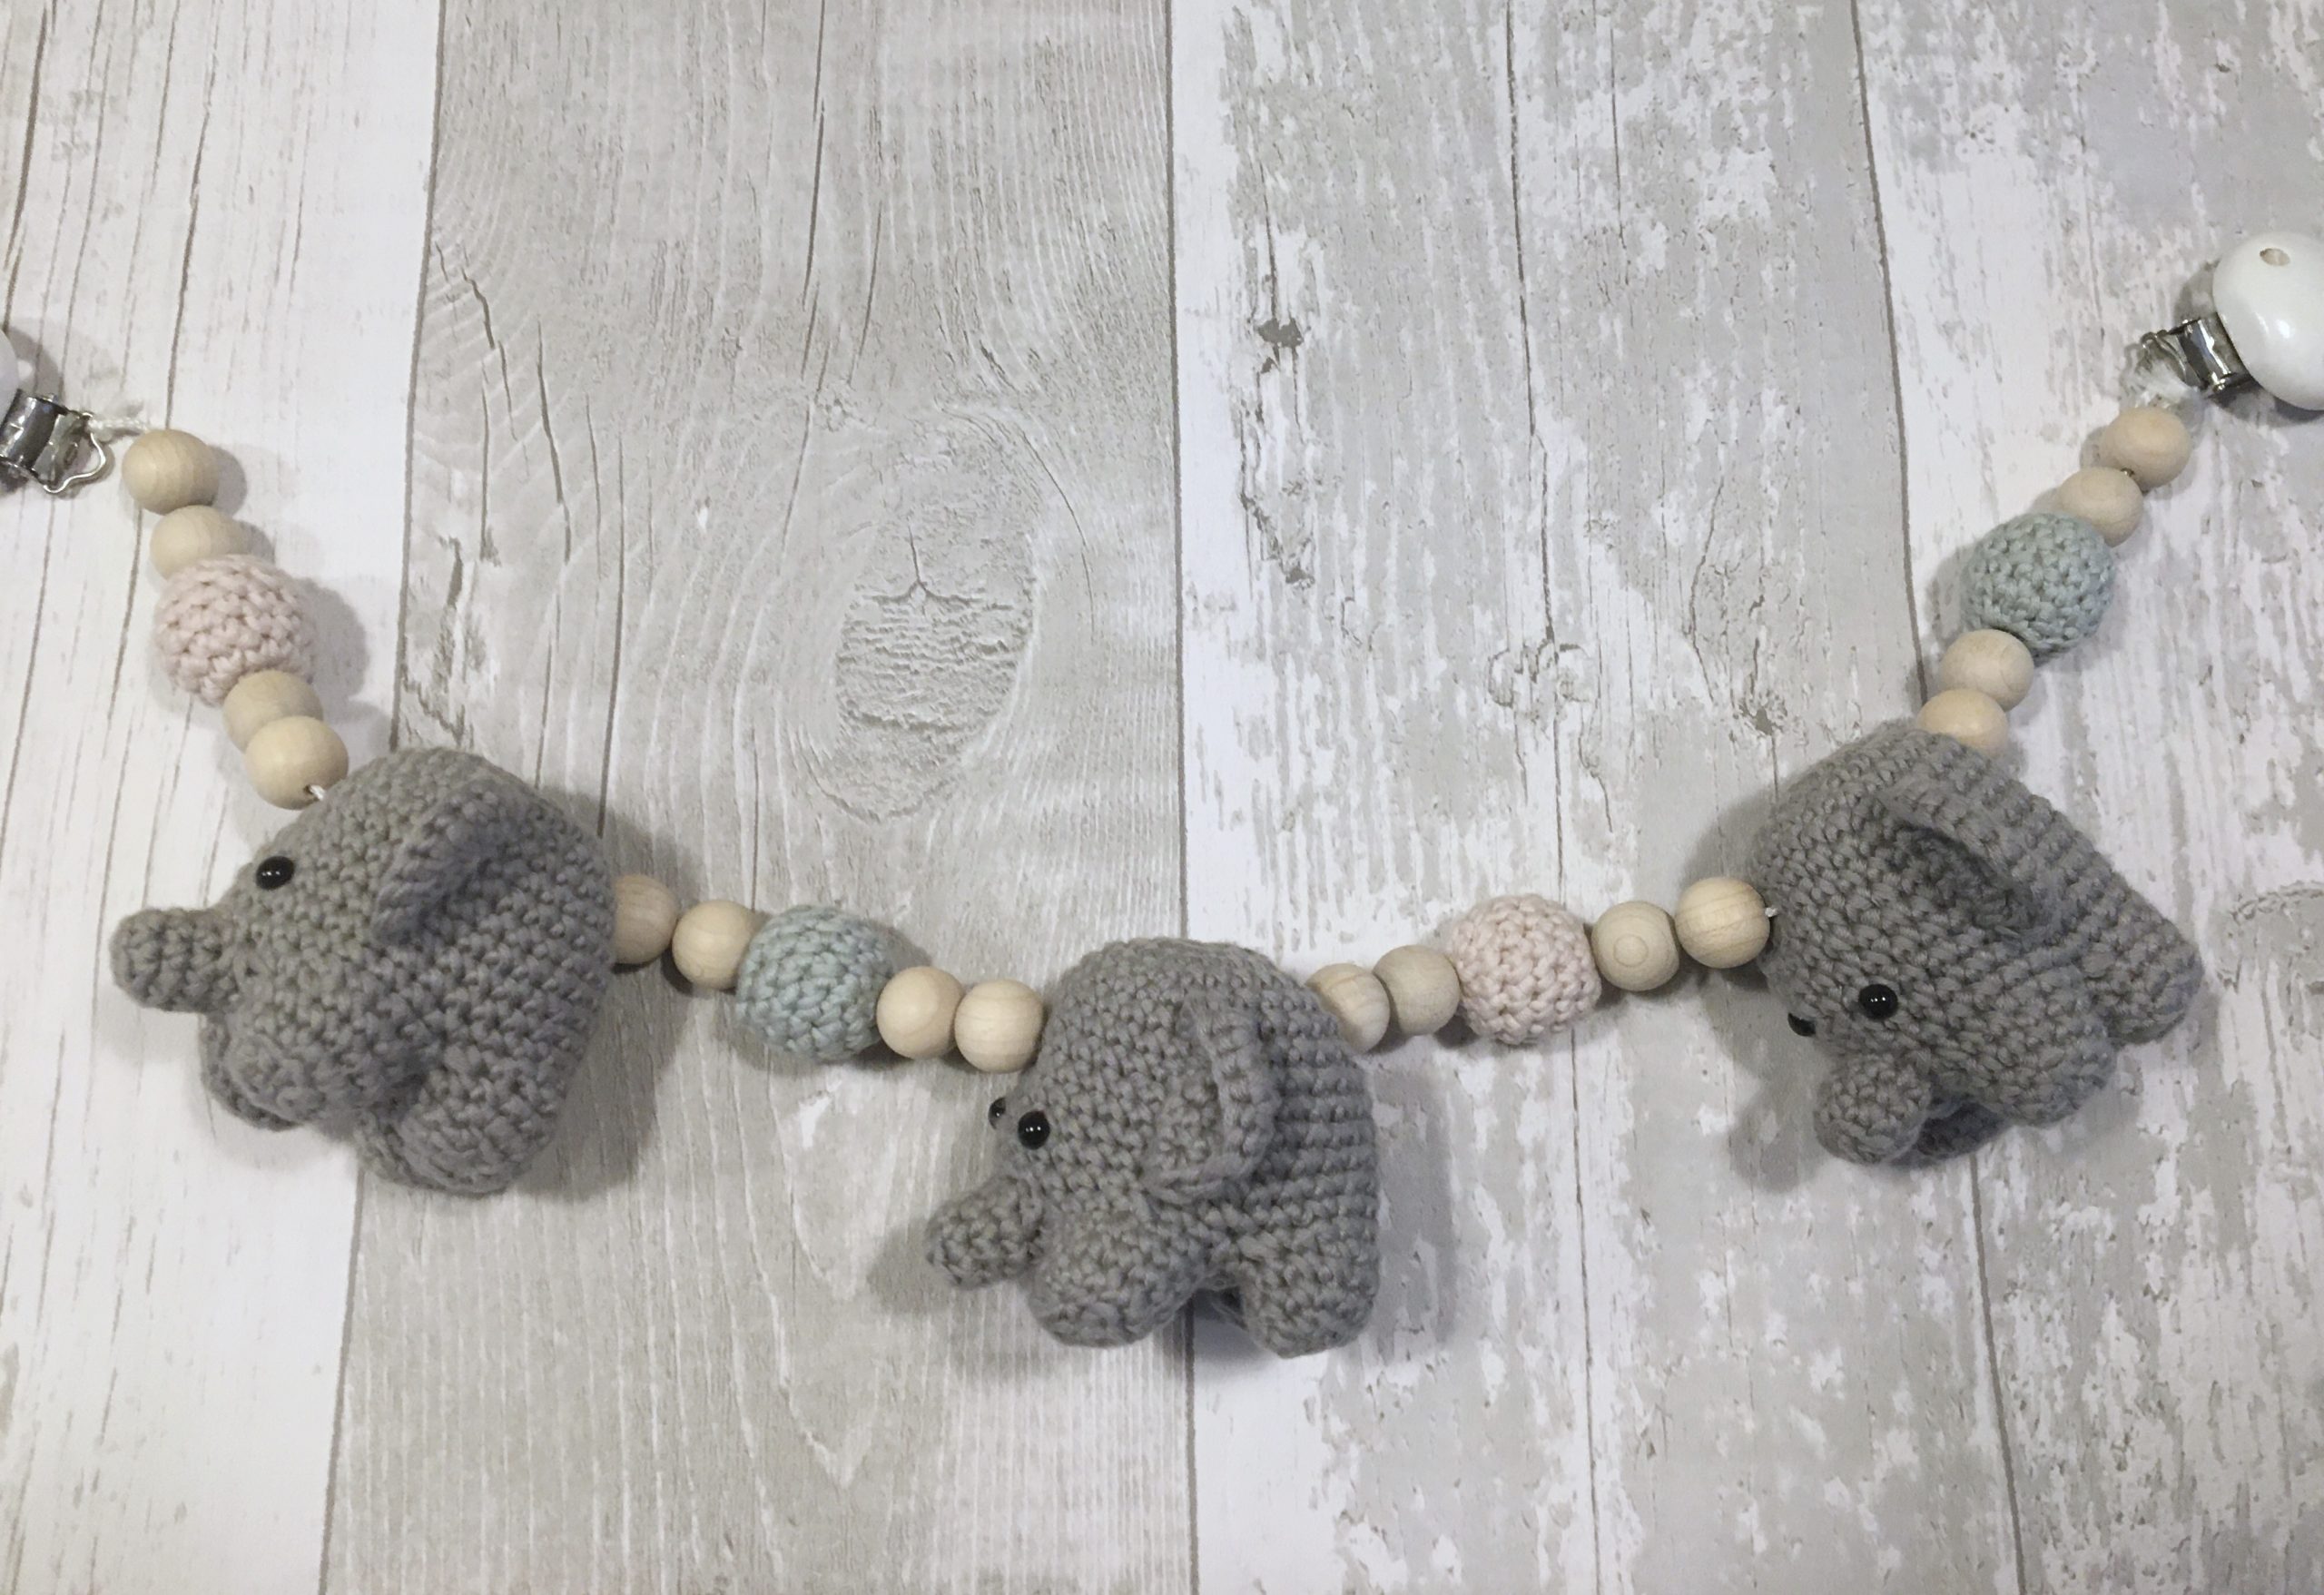 Ellen the Elephant Pram Chain - Loopsan Crochet Blog